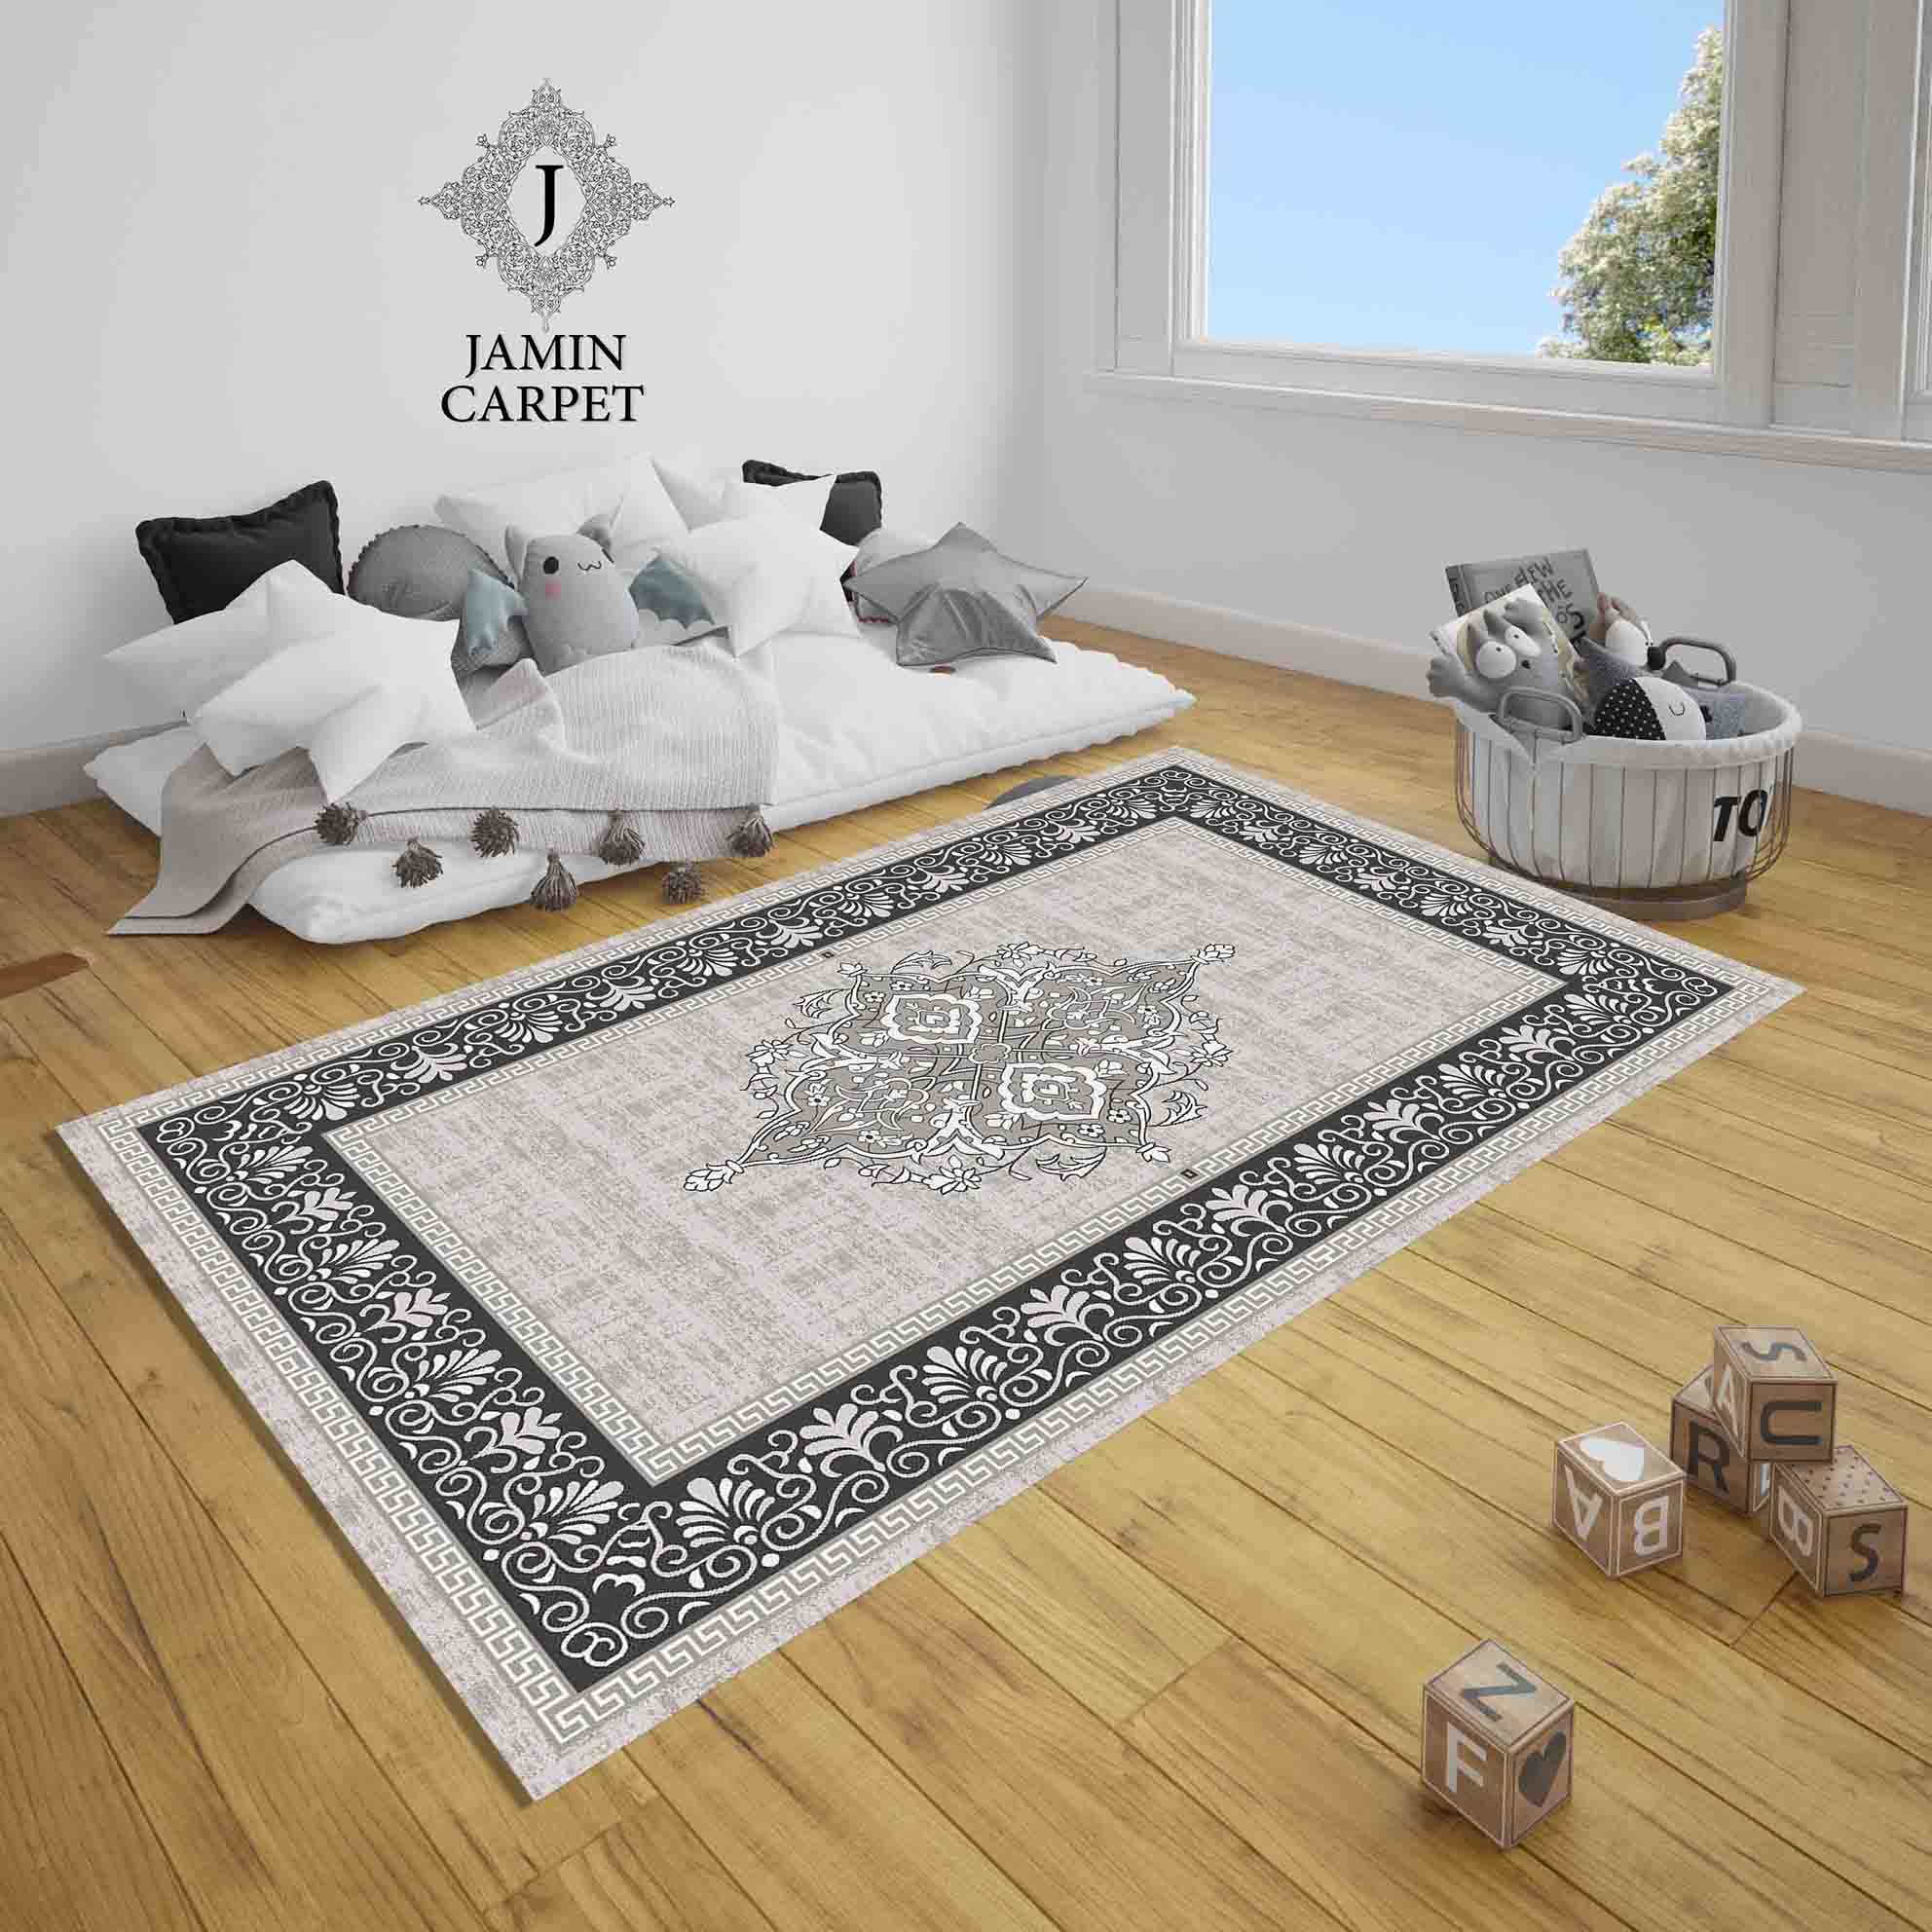 Fantasy carpet, code 264, comb 400, density 1800, all acrylic